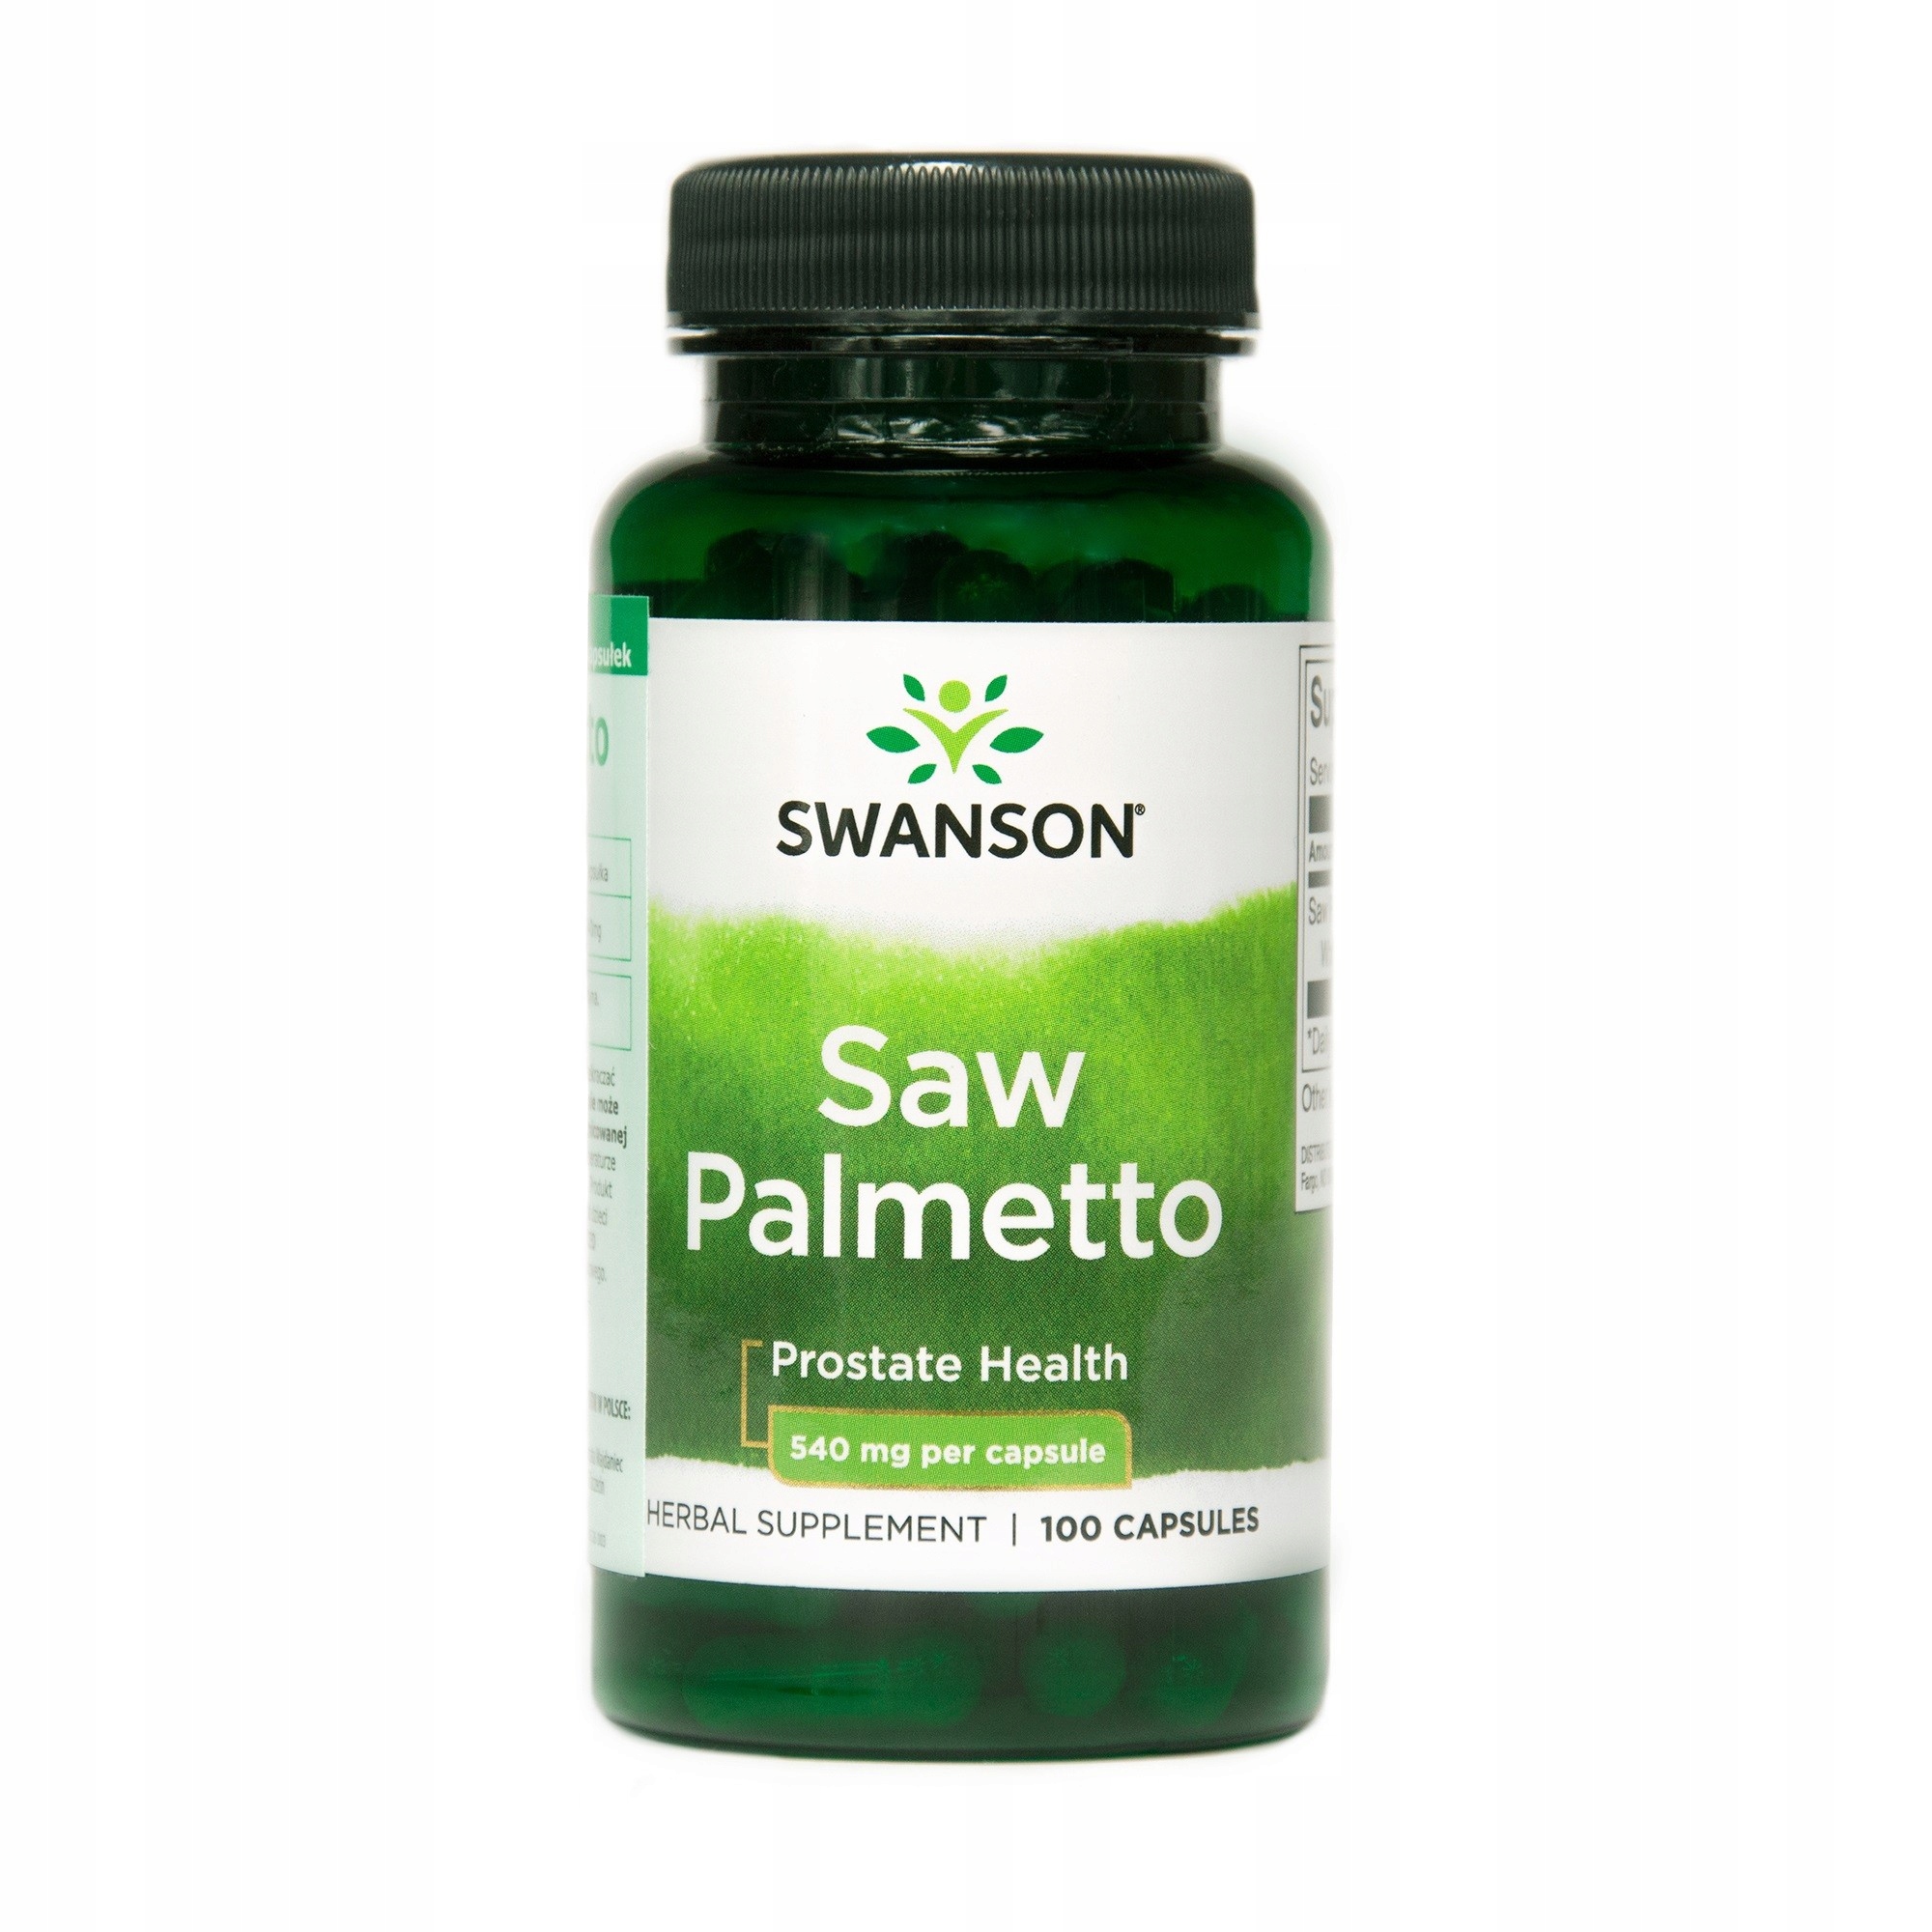 Swanson Saw Palmetto Со Пальметто 540 мг. 100 капс.